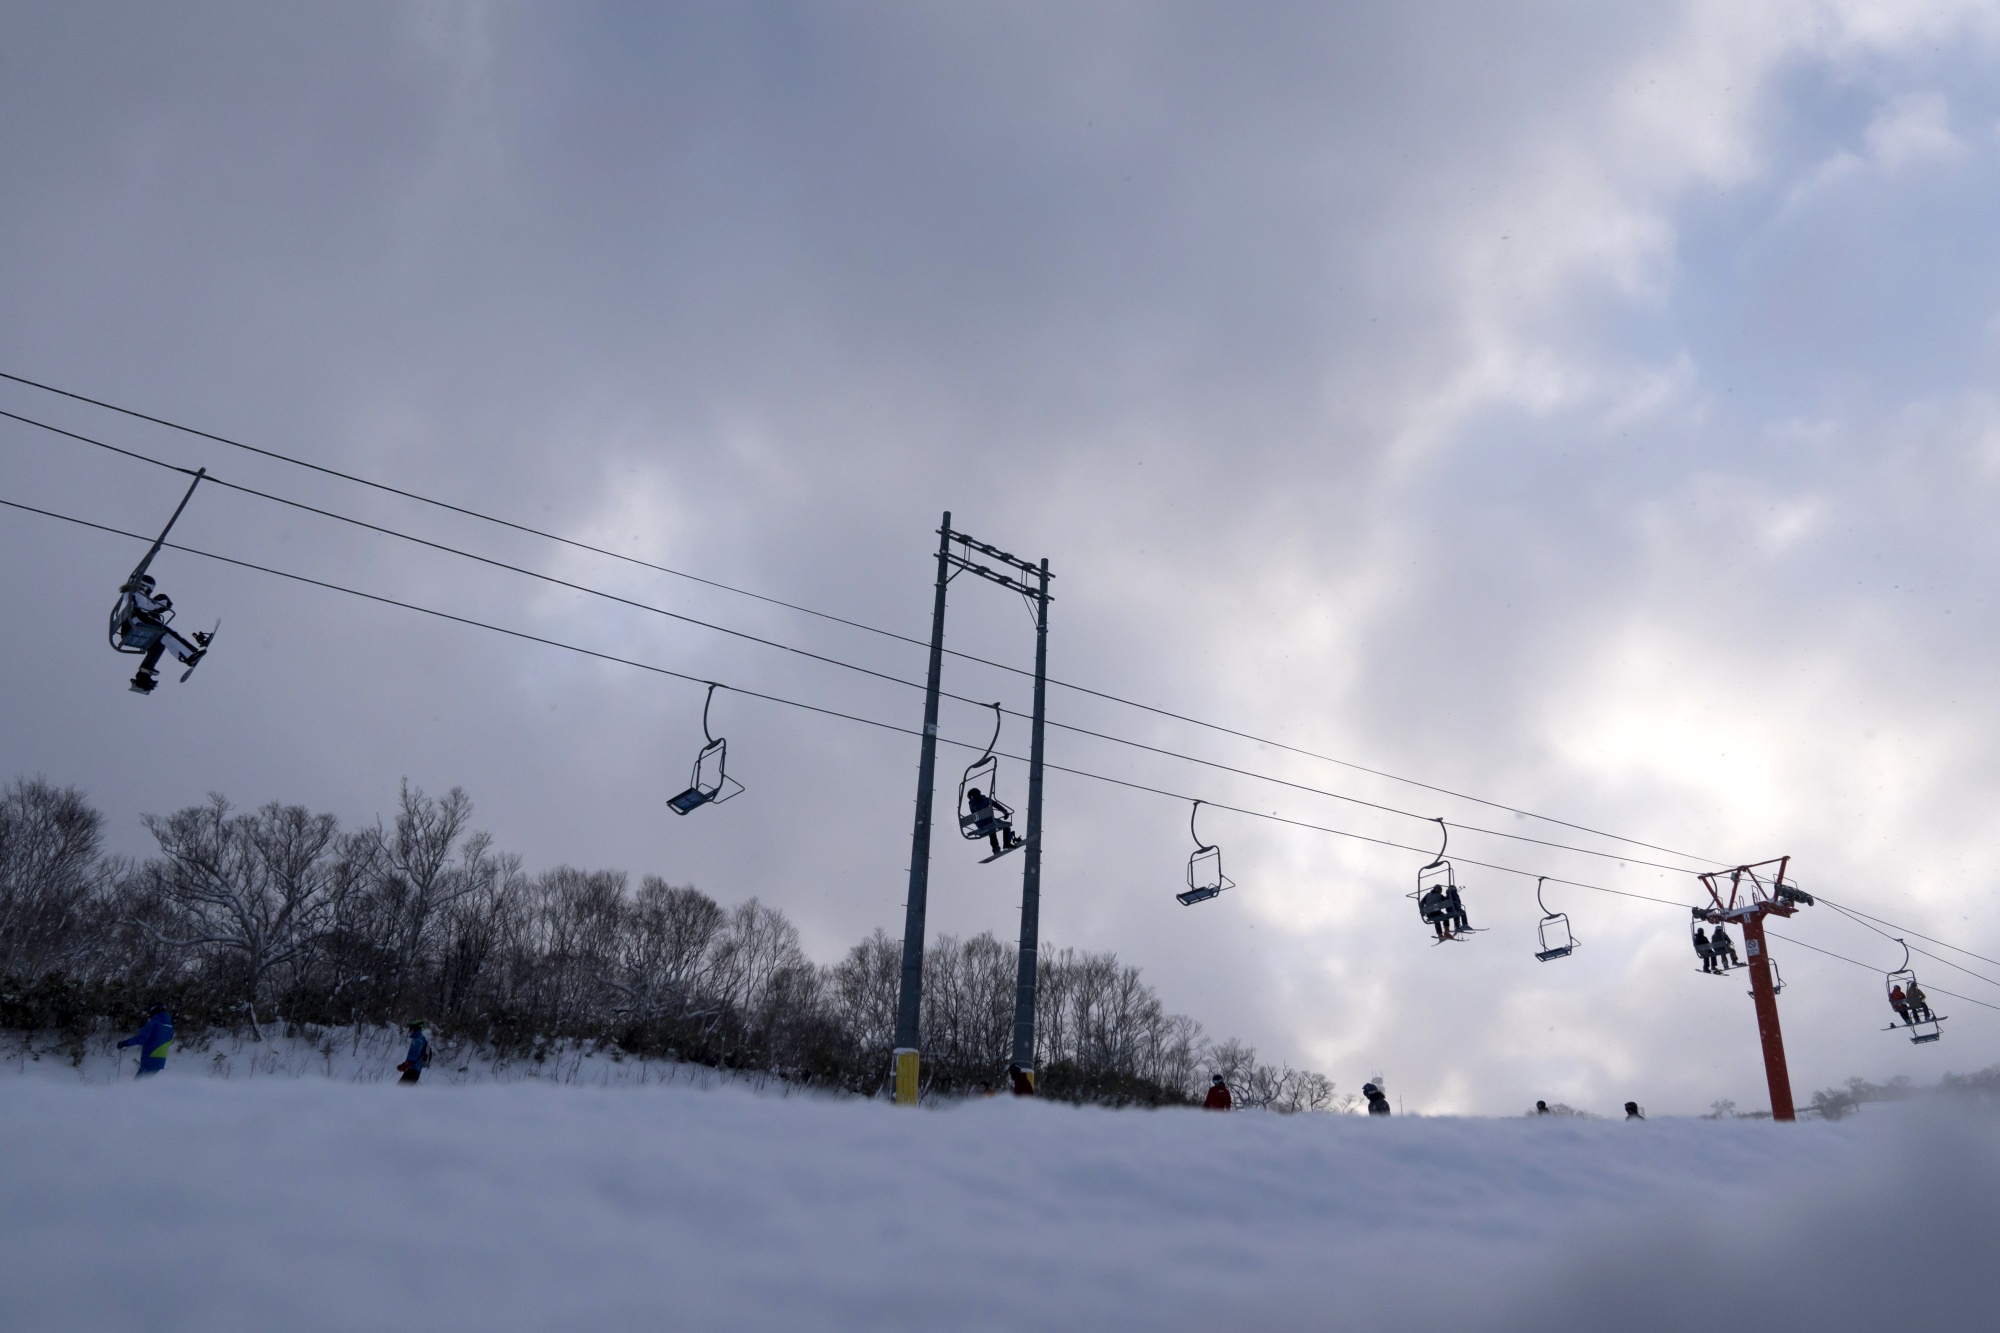 NY Ski Resort's Snowmaking Roars Back To Life - Powder